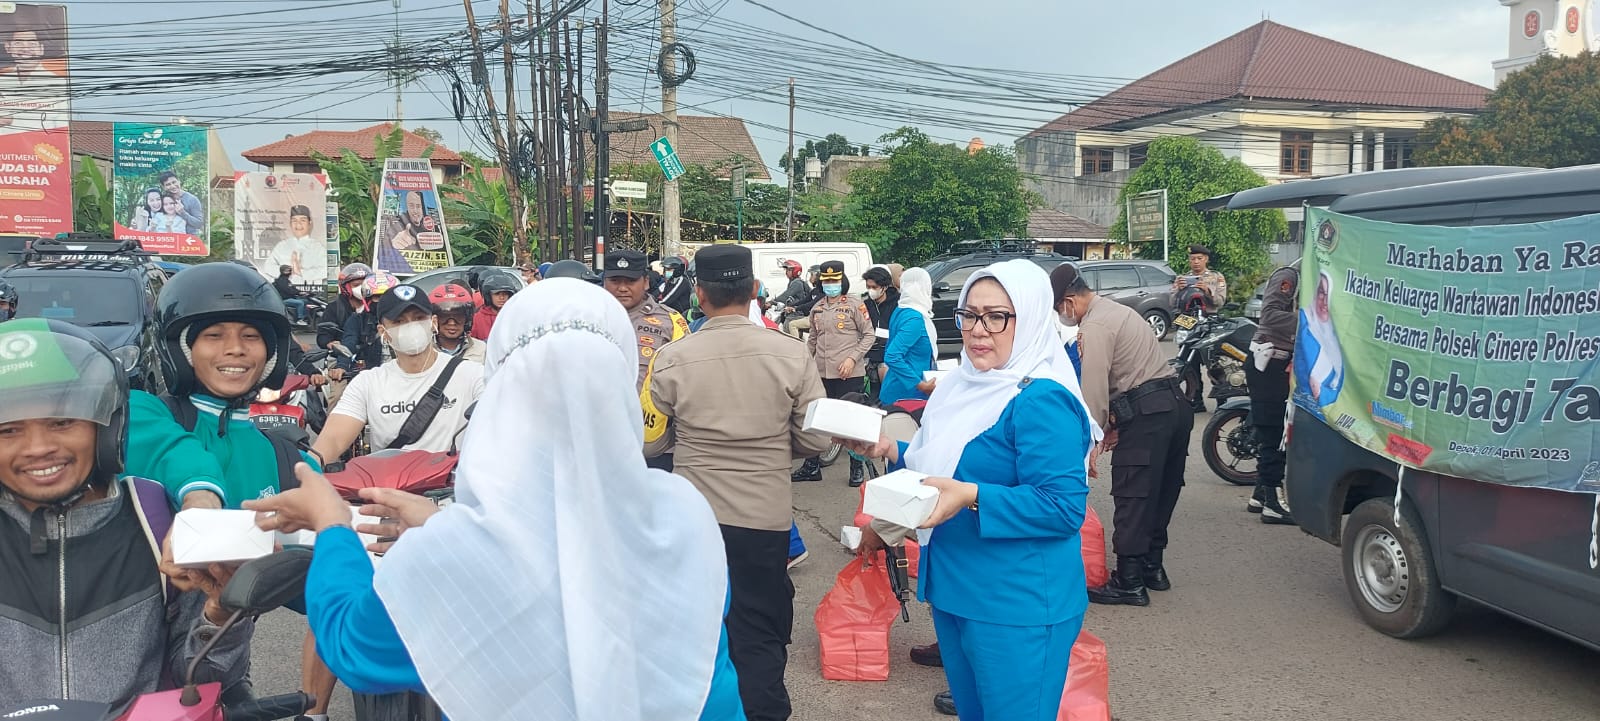 Ramadan Berkah, IKWI DKI Jakarta Bersama Polsek Cinere Berbagi Takjil